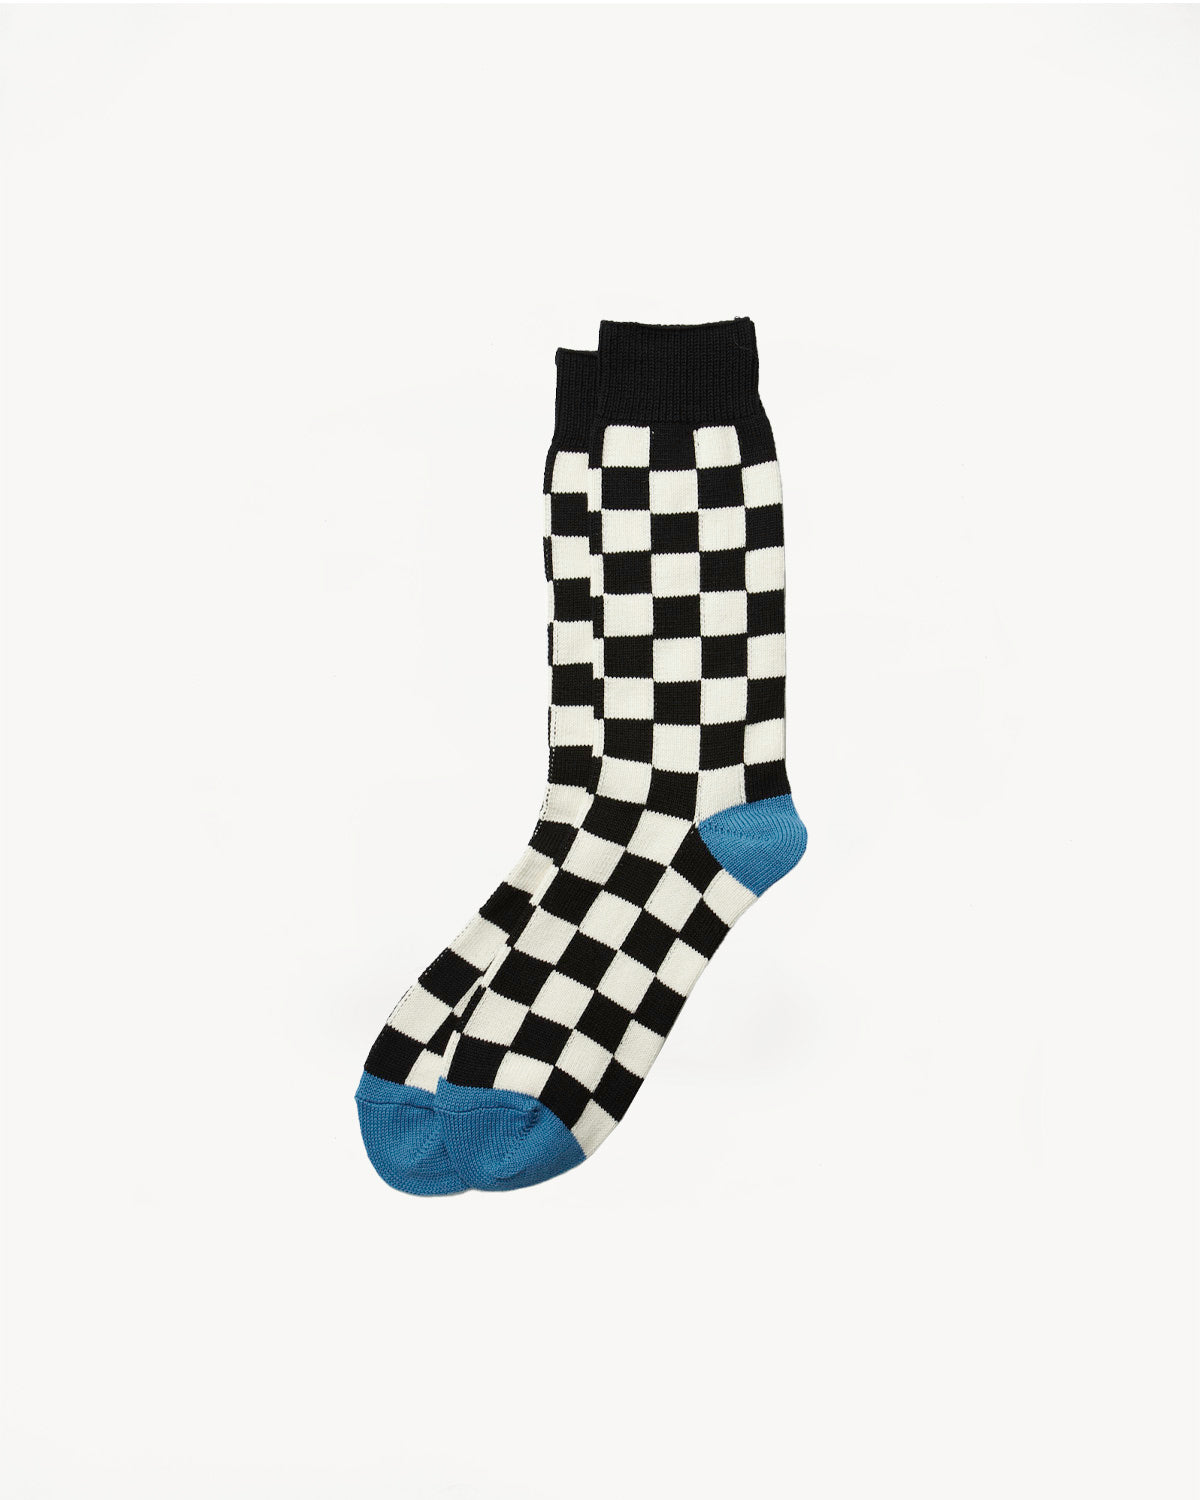 R1495 - Checkerboard Crew Socks - Black, Ivory, Light Blue